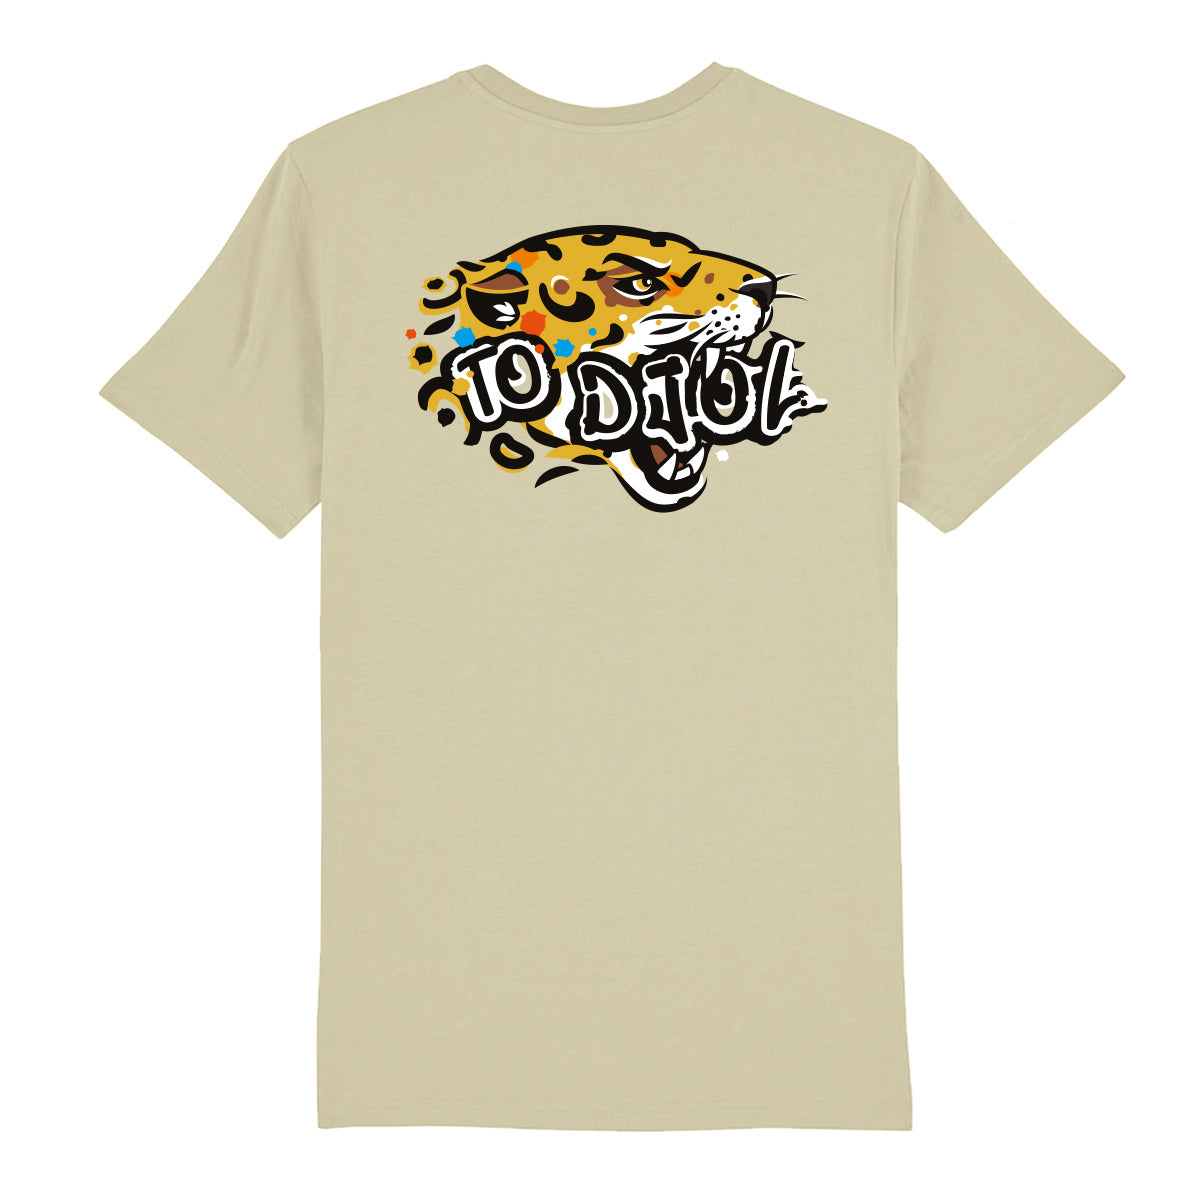 bat wey - T-shirt Homme To djol Jaguar - Guyane - Sable